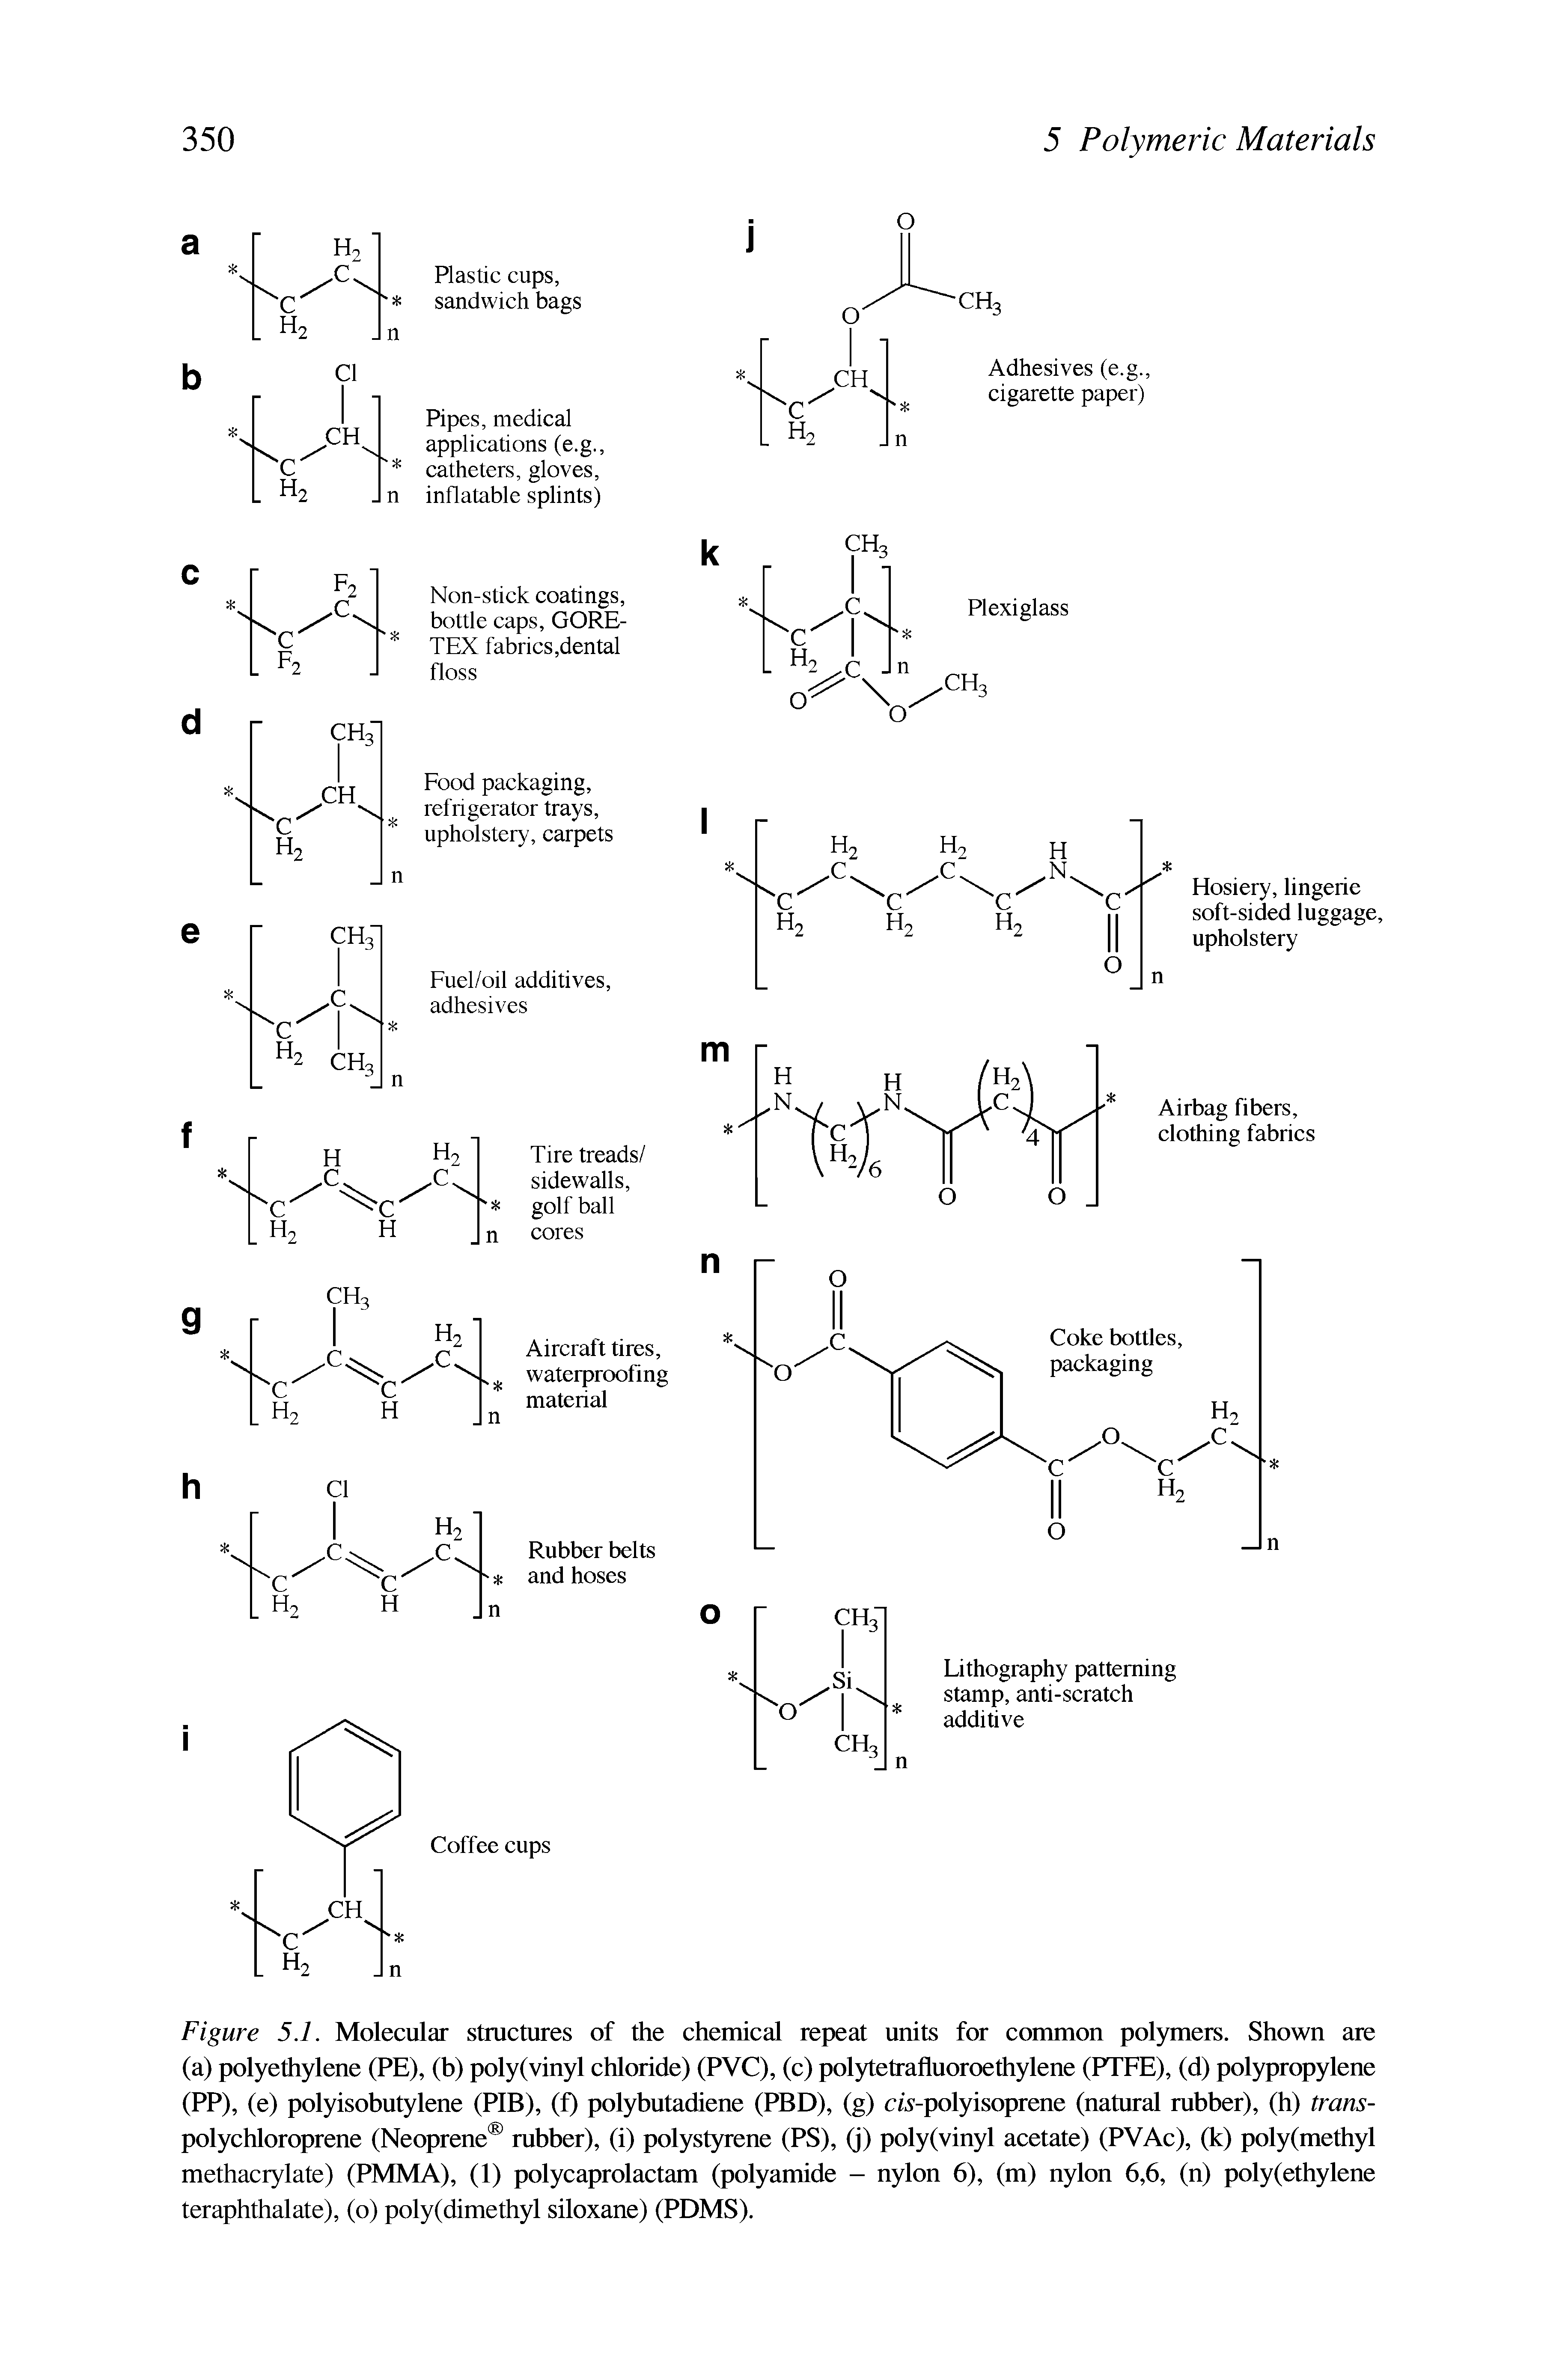 Figure 5.1. Molecular structures of die chemical repeat units for common polymers. Shown are (a) polyethylene (PE), (b) poly(vinyl chloride) (PVC), (c) polytetrafluoroethylene (FI FE), (d) polypropylene (PP), (e) polyisobutylene (PIB), (f) polybutadiene (PBD), (g) cw-polyisoprene (natural rubber), (h) trans-polychloroprene (Neoprene rubber), (i) polystyrene (PS), (j) poly(vinyl acetate) (PVAc), (k) poly(methyl methaciylate) (PMMA), (1) polycaprolactam (polyamide - nylon 6), (m) nylon 6,6, (n) poly(ethylene teraphthalate), (o) poly(dimethyl siloxane) (PDMS).